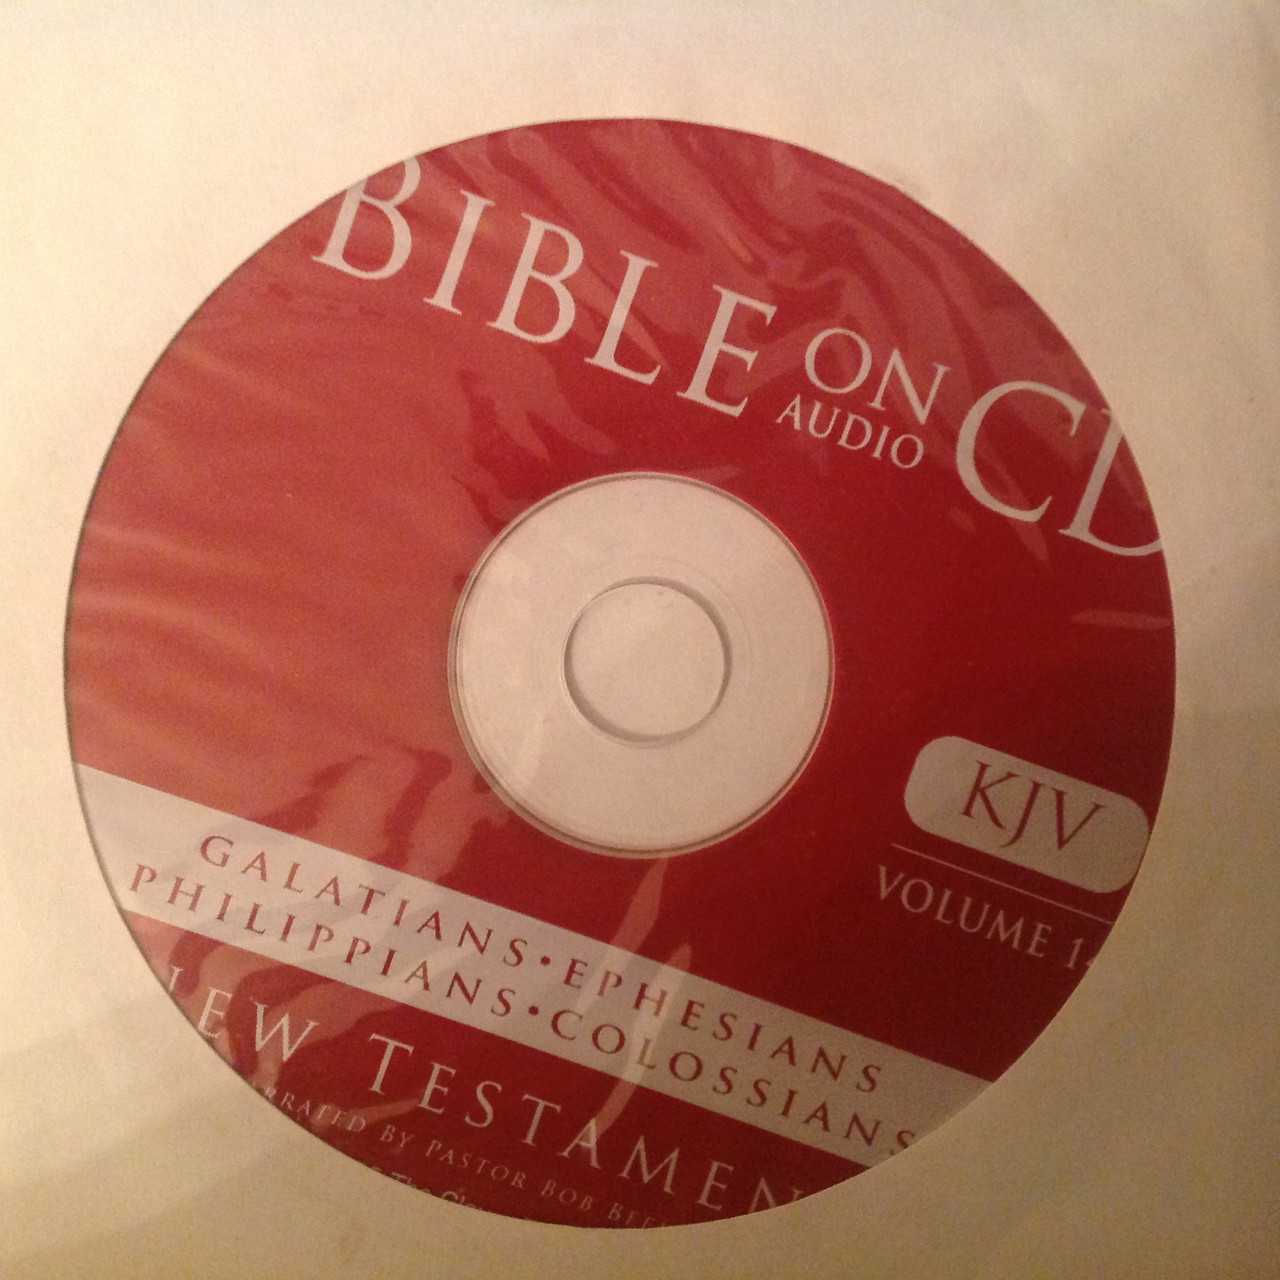 Bible on Audio CD, Vol. 14, Galatians, Ephesians, Philippians, Colossians CD